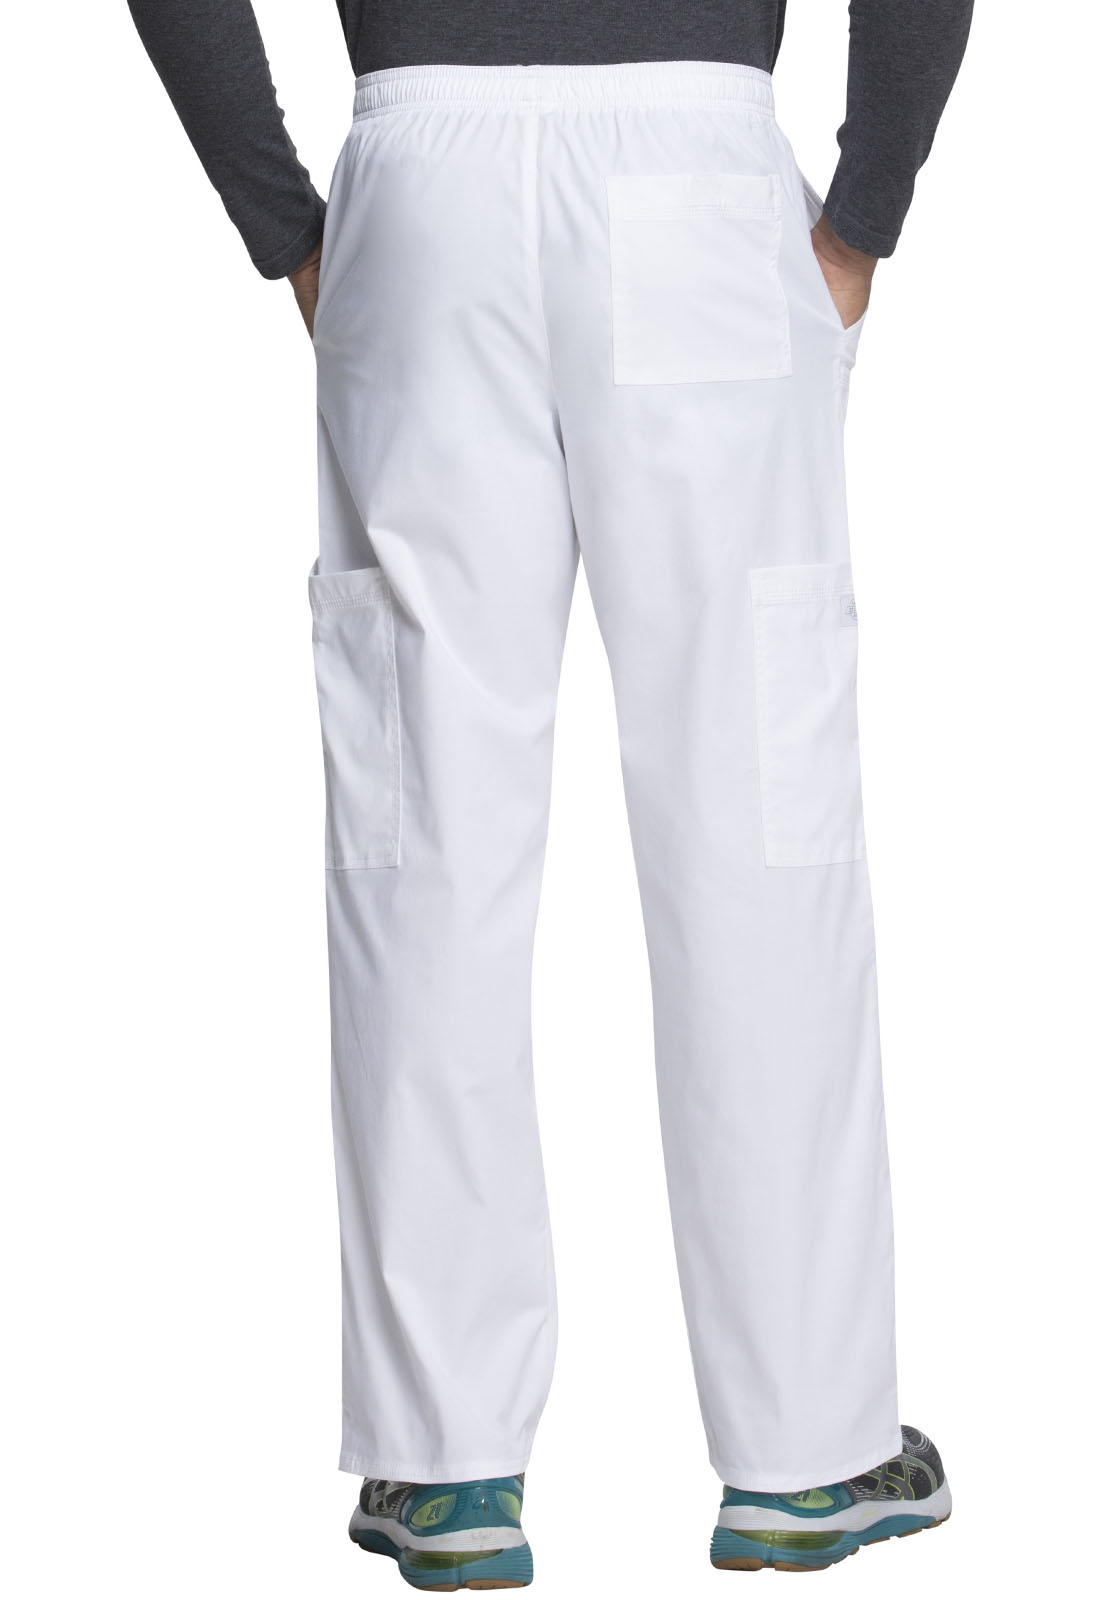 Dickies Gen Flex Men's Drawstring Cargo Pant in White from Dickies Medical